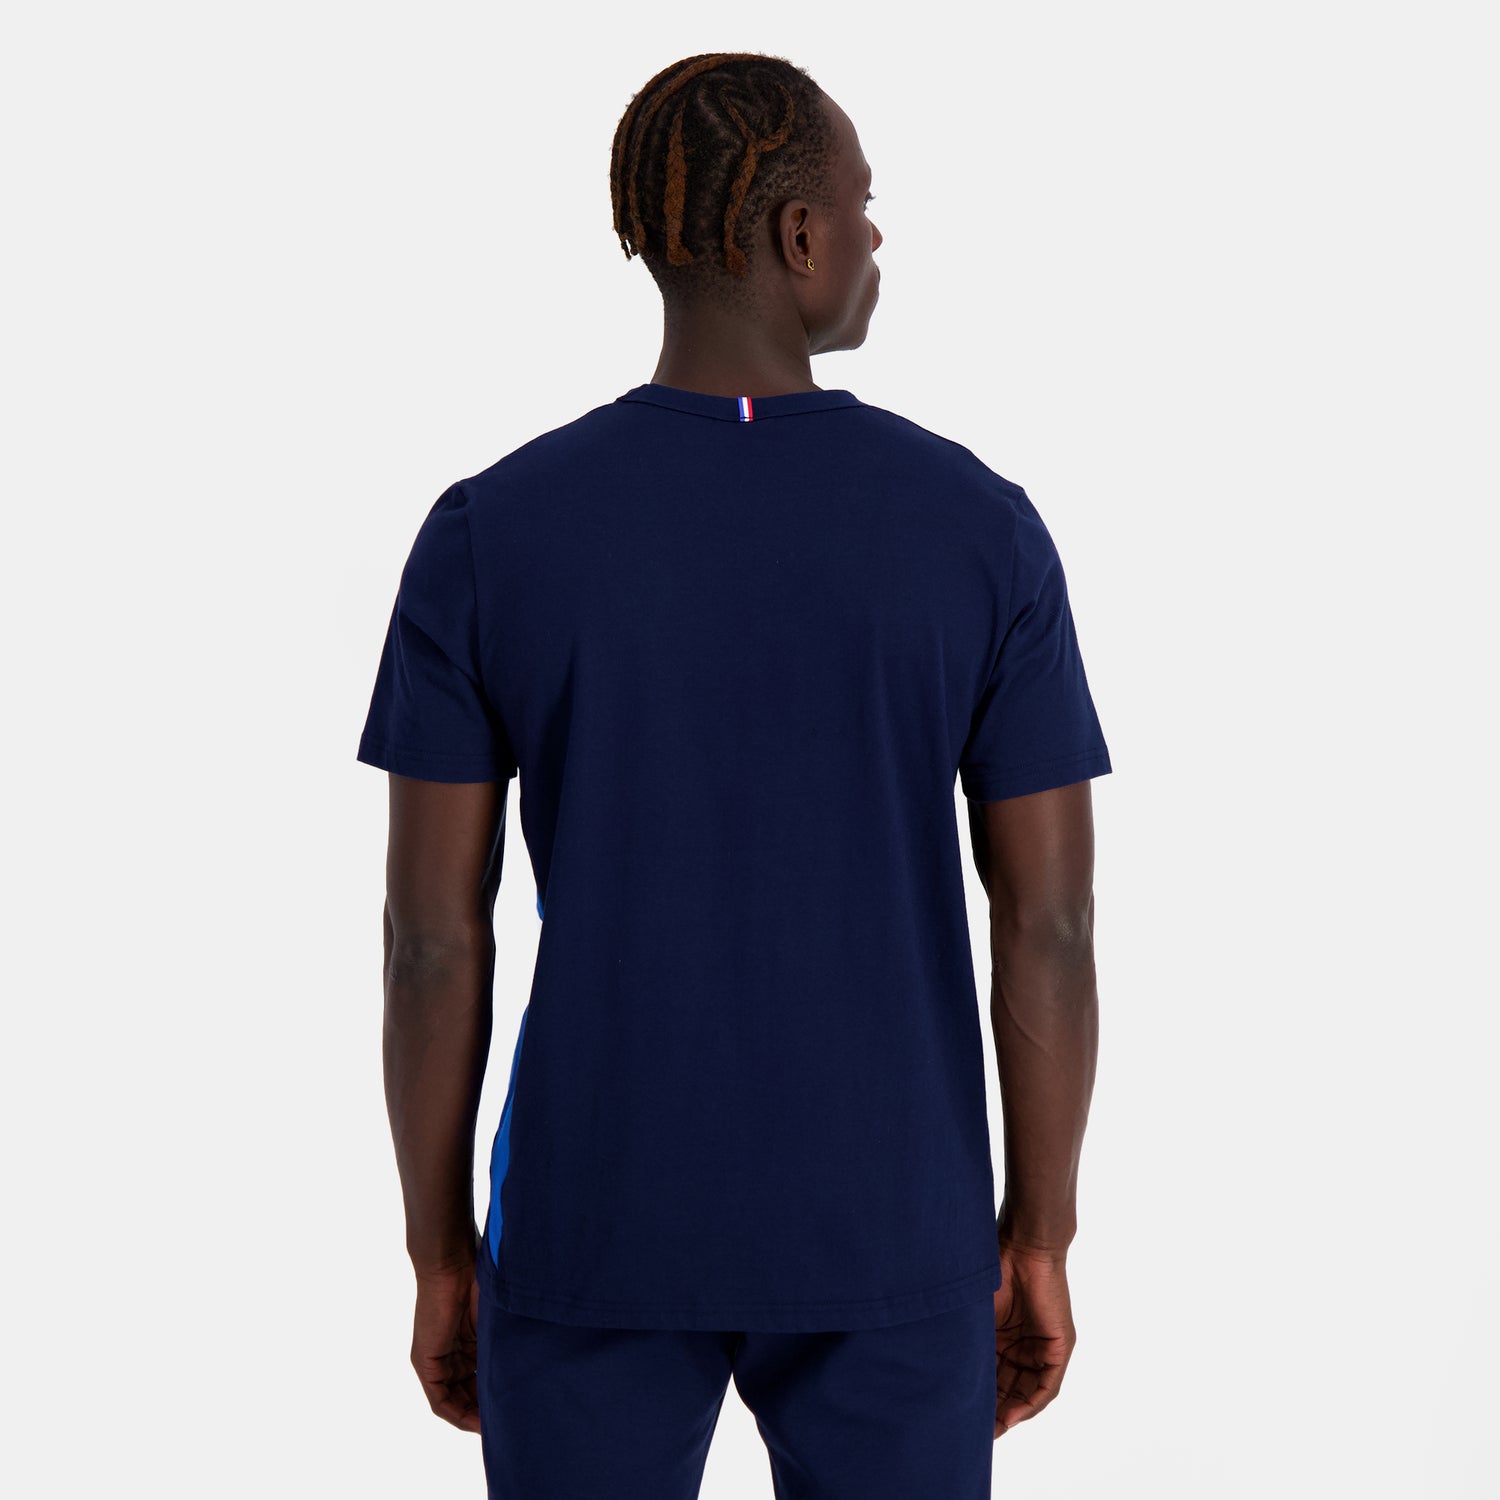 2410211-SAISON 1 Tee SS N°1 M bleu nuit  | Camiseta Hombre